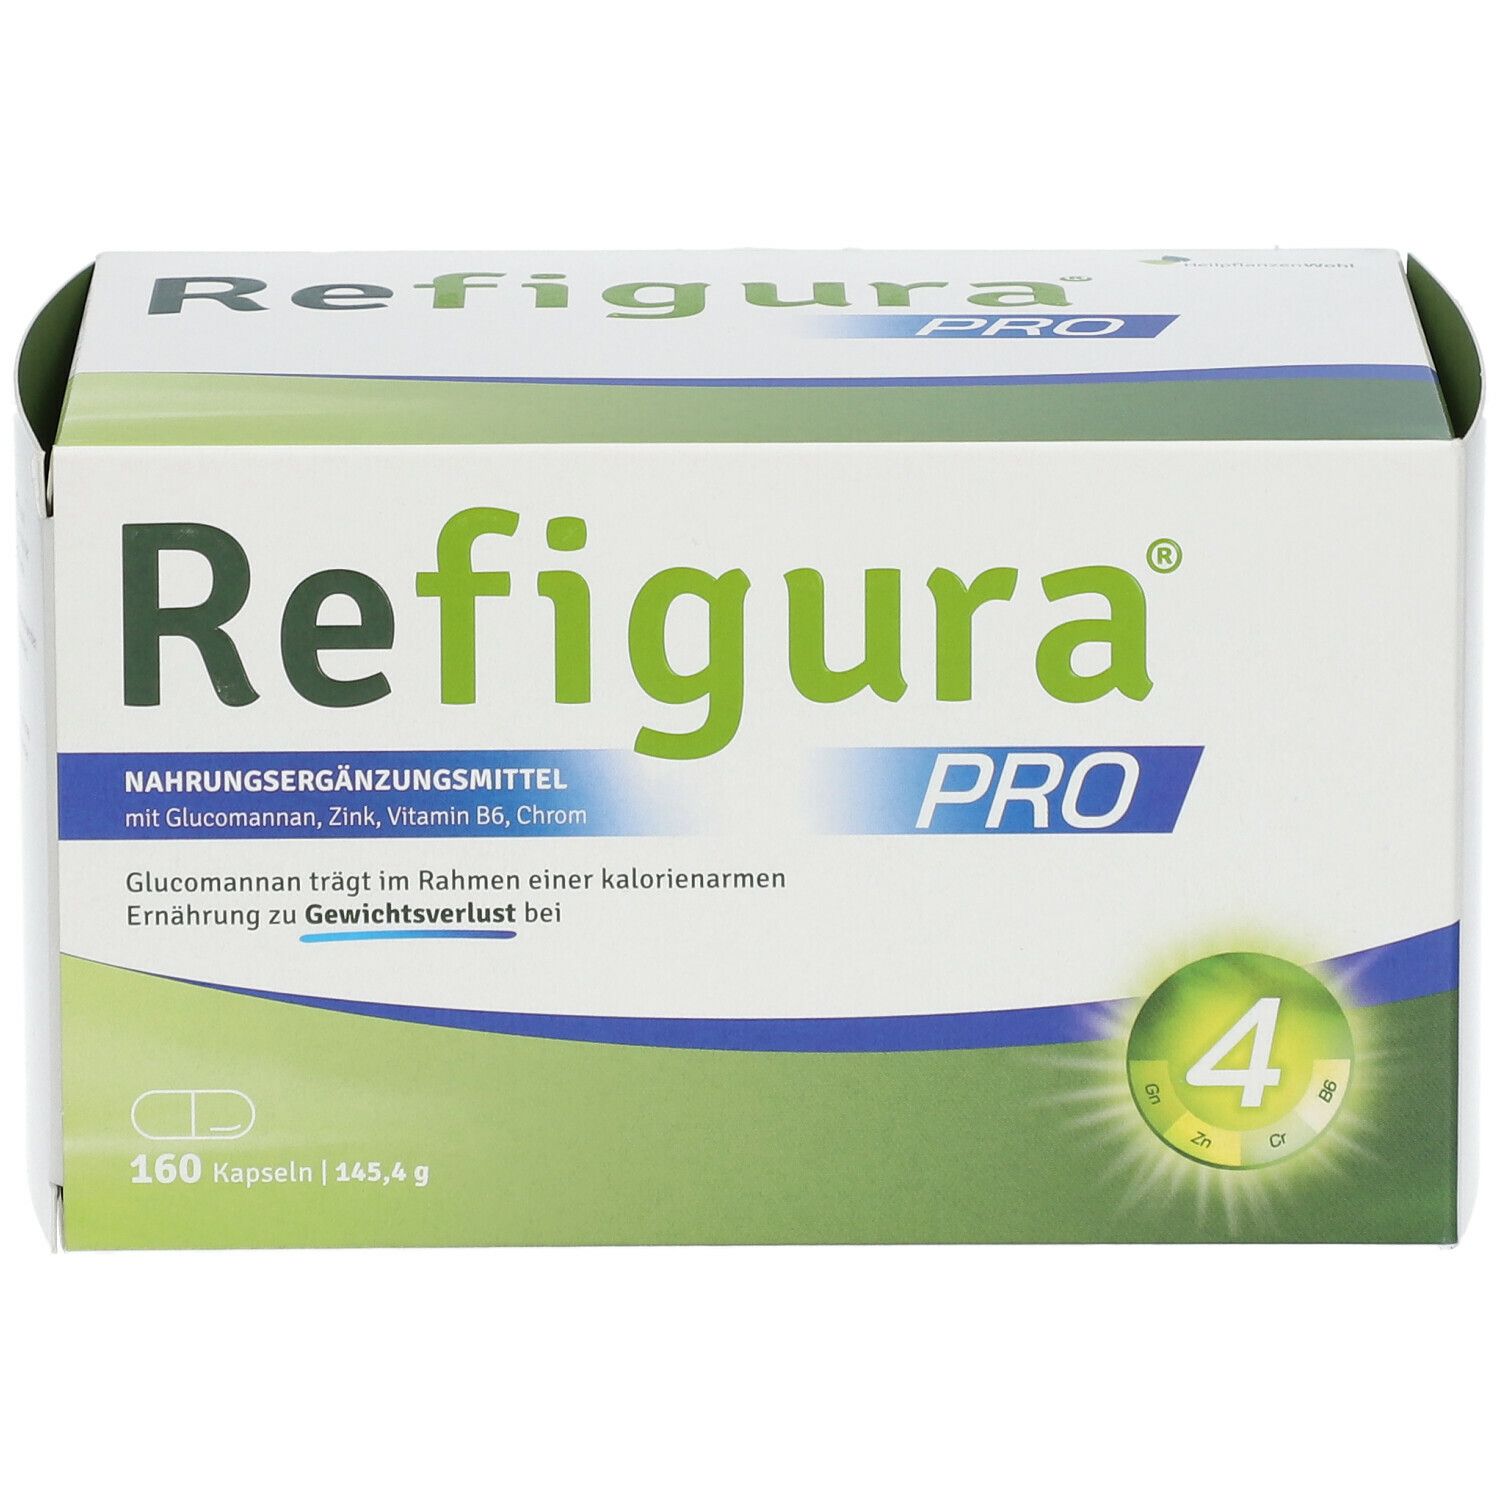 Refigura® Pro